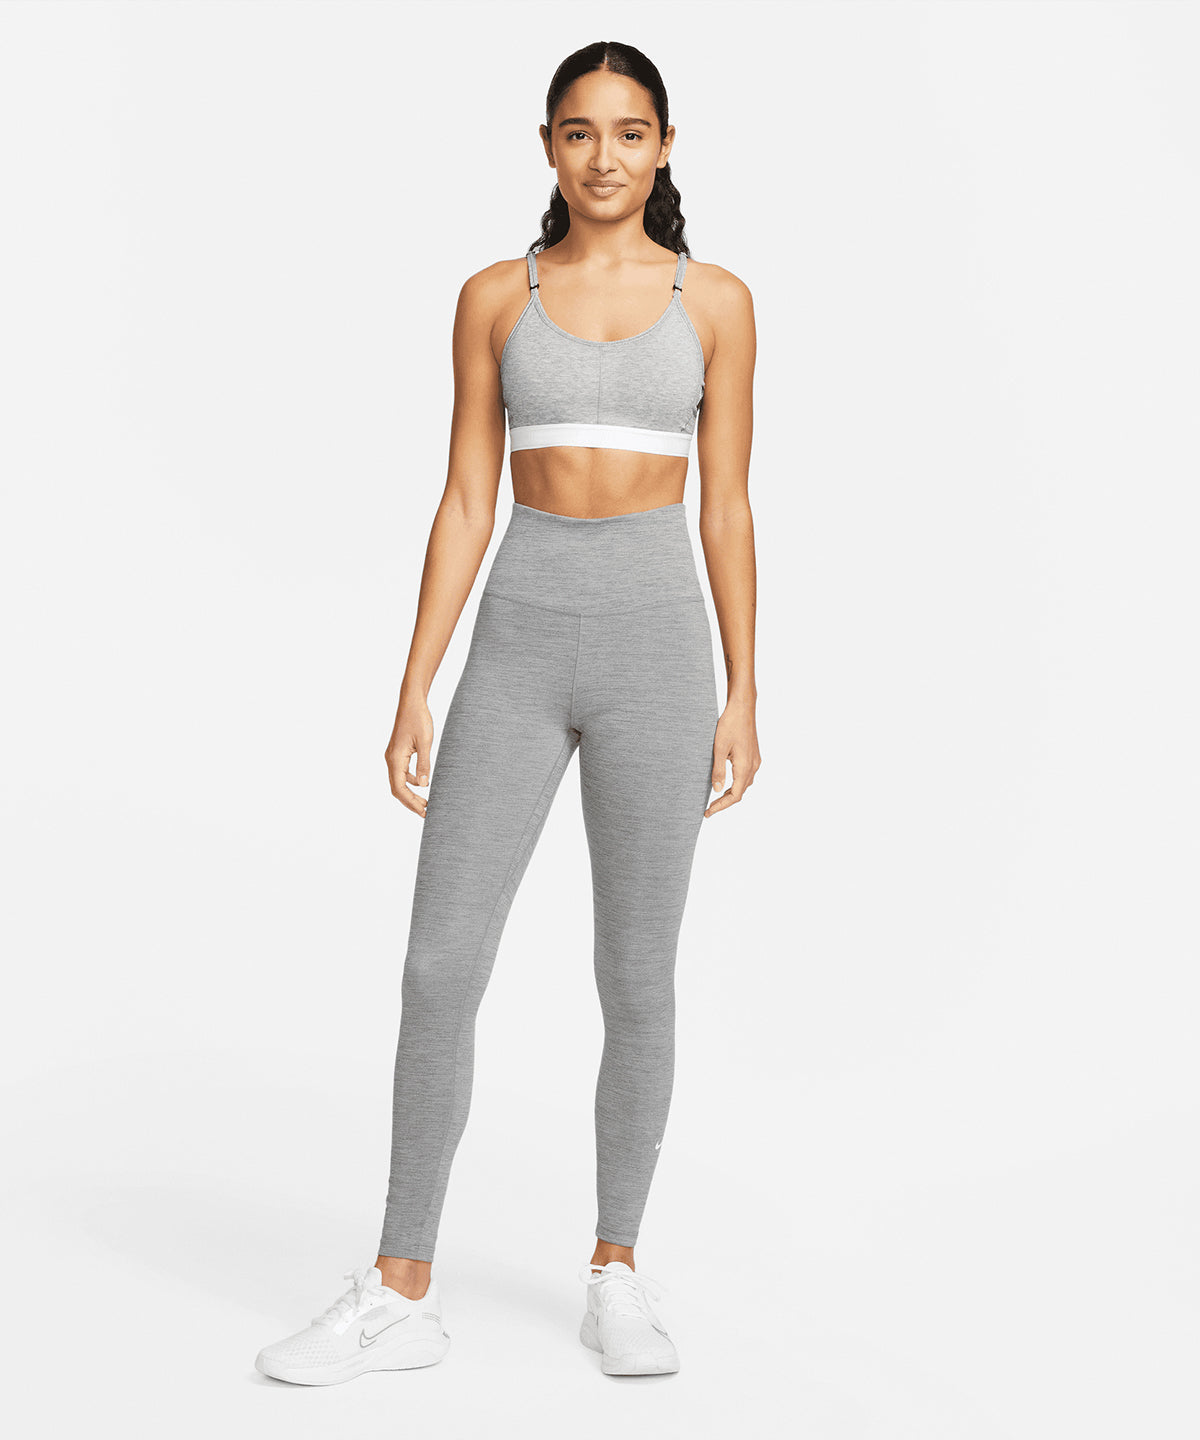 Cosmic Fuchsia/White - Women’s Nike One Dri-FIT high-rise leggings